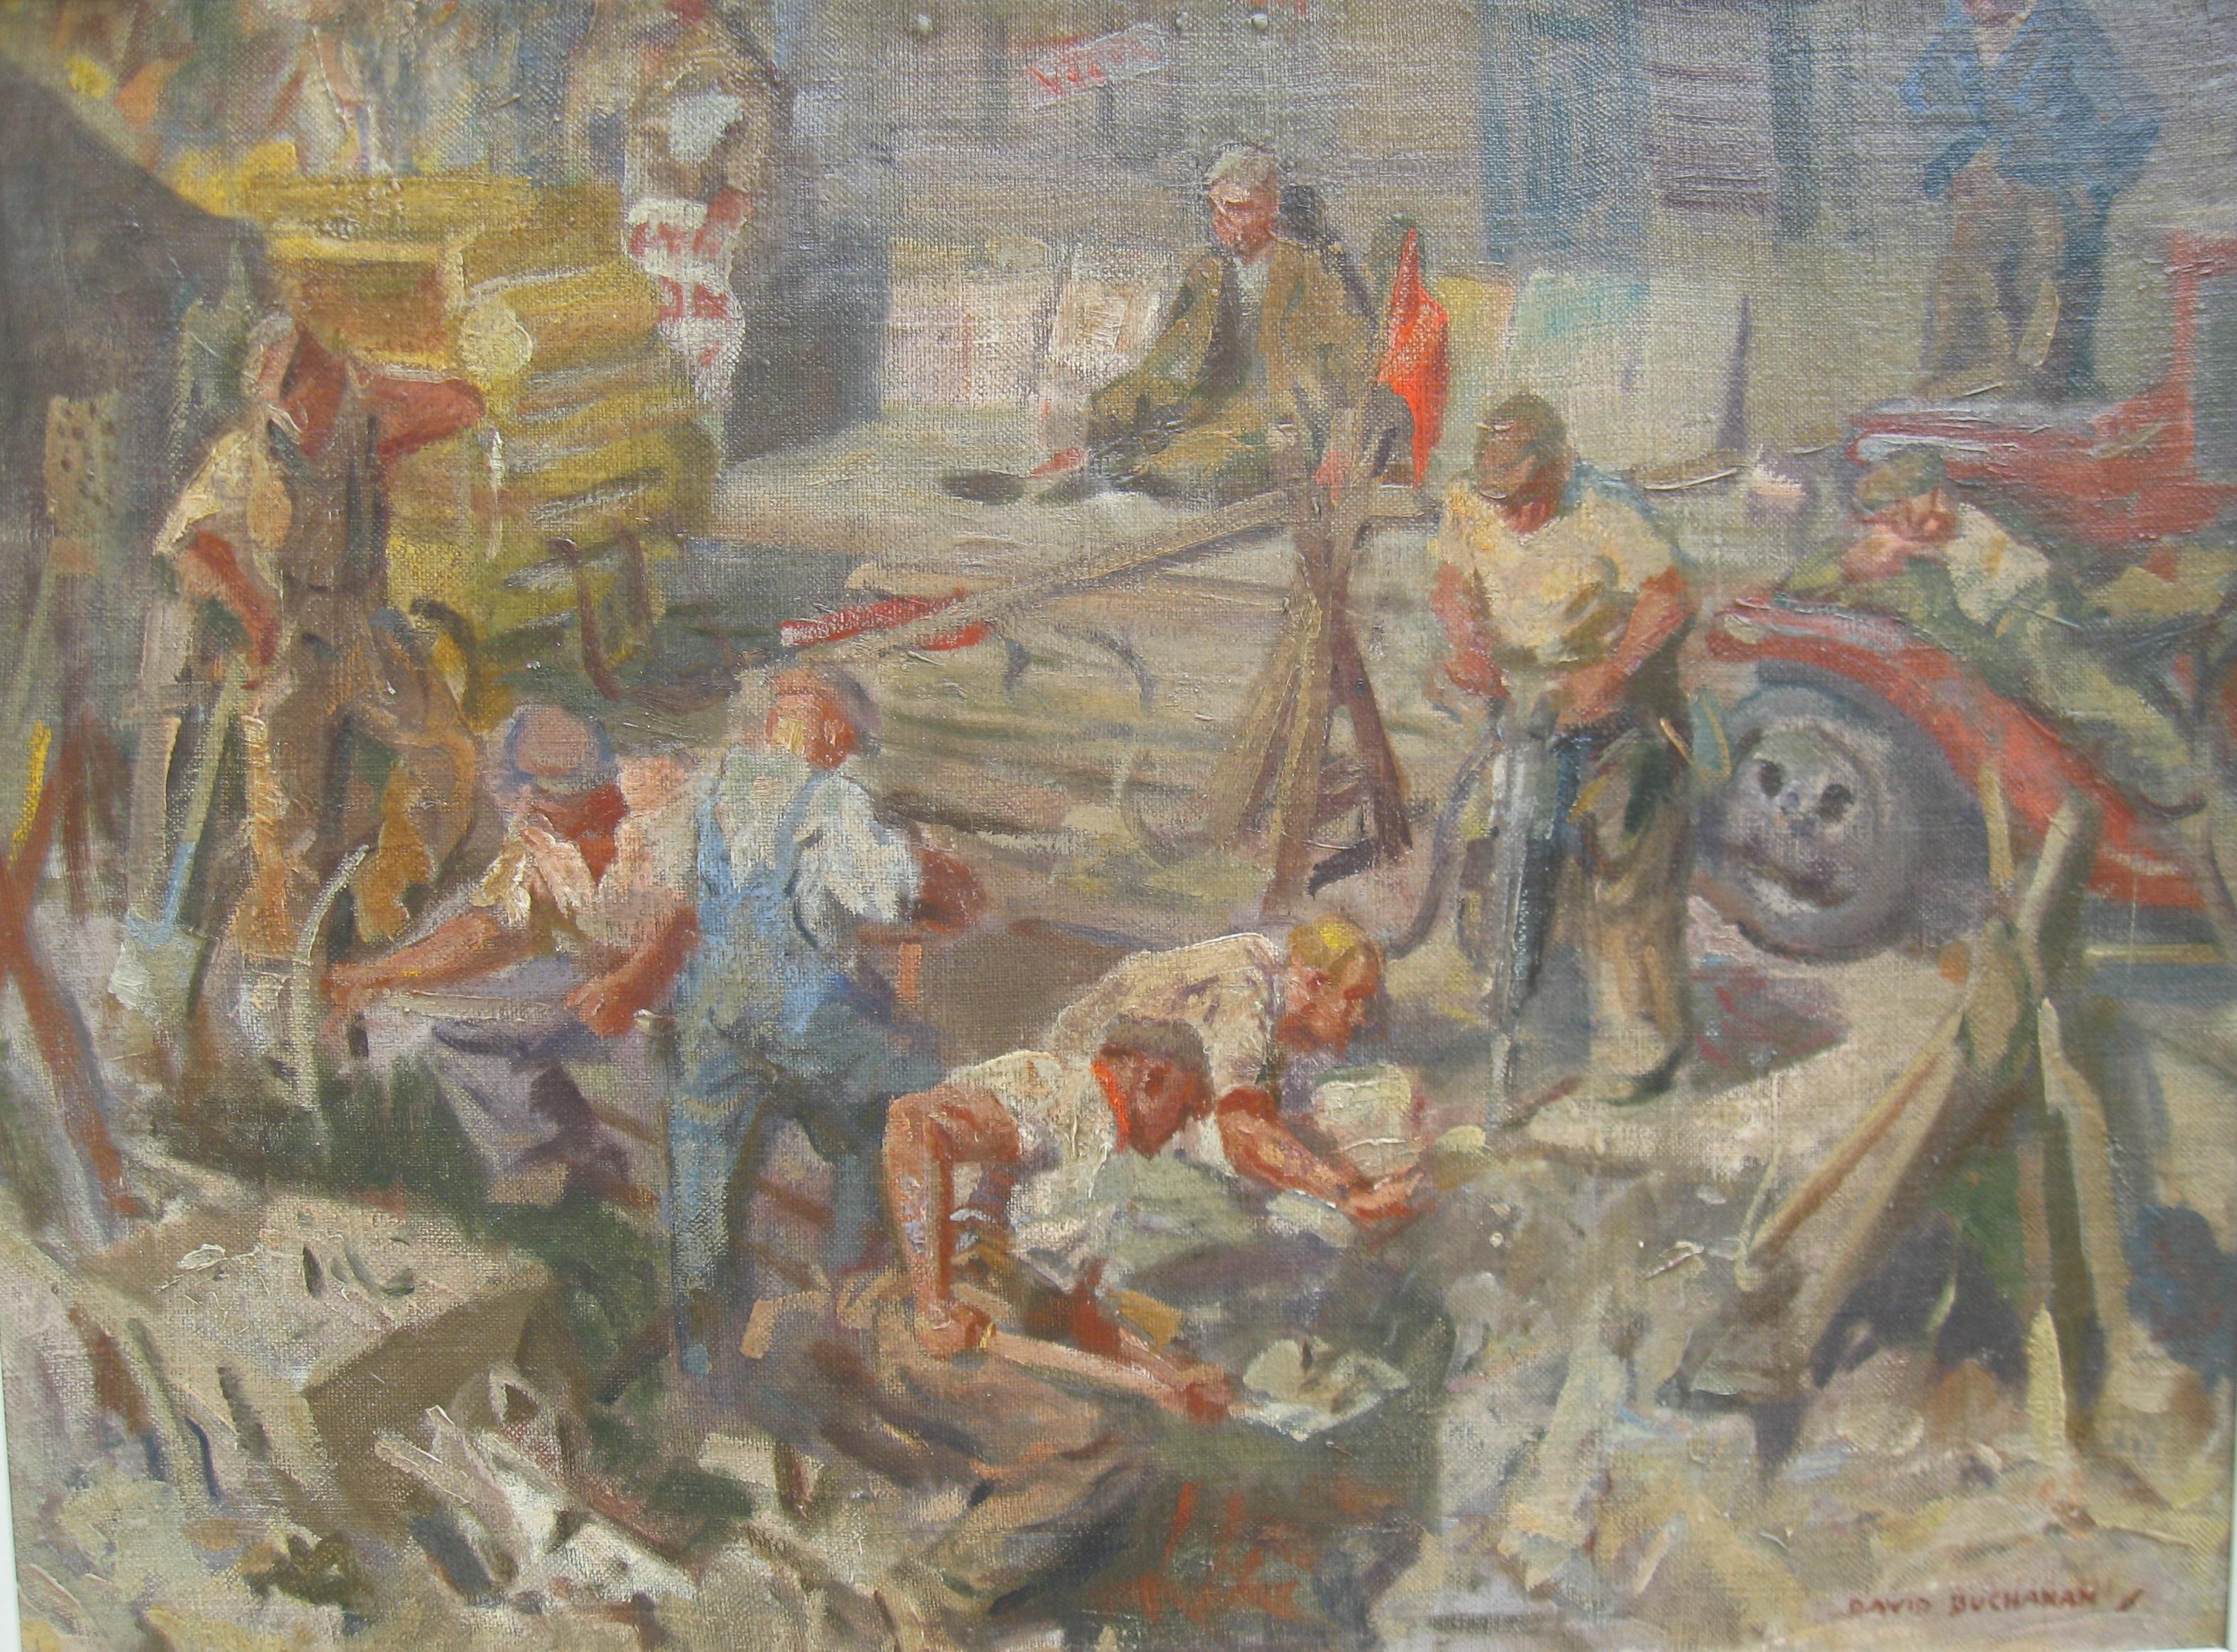 David R Buchanan 'Men at Work' oil circa 1930 - Painting by Unknown